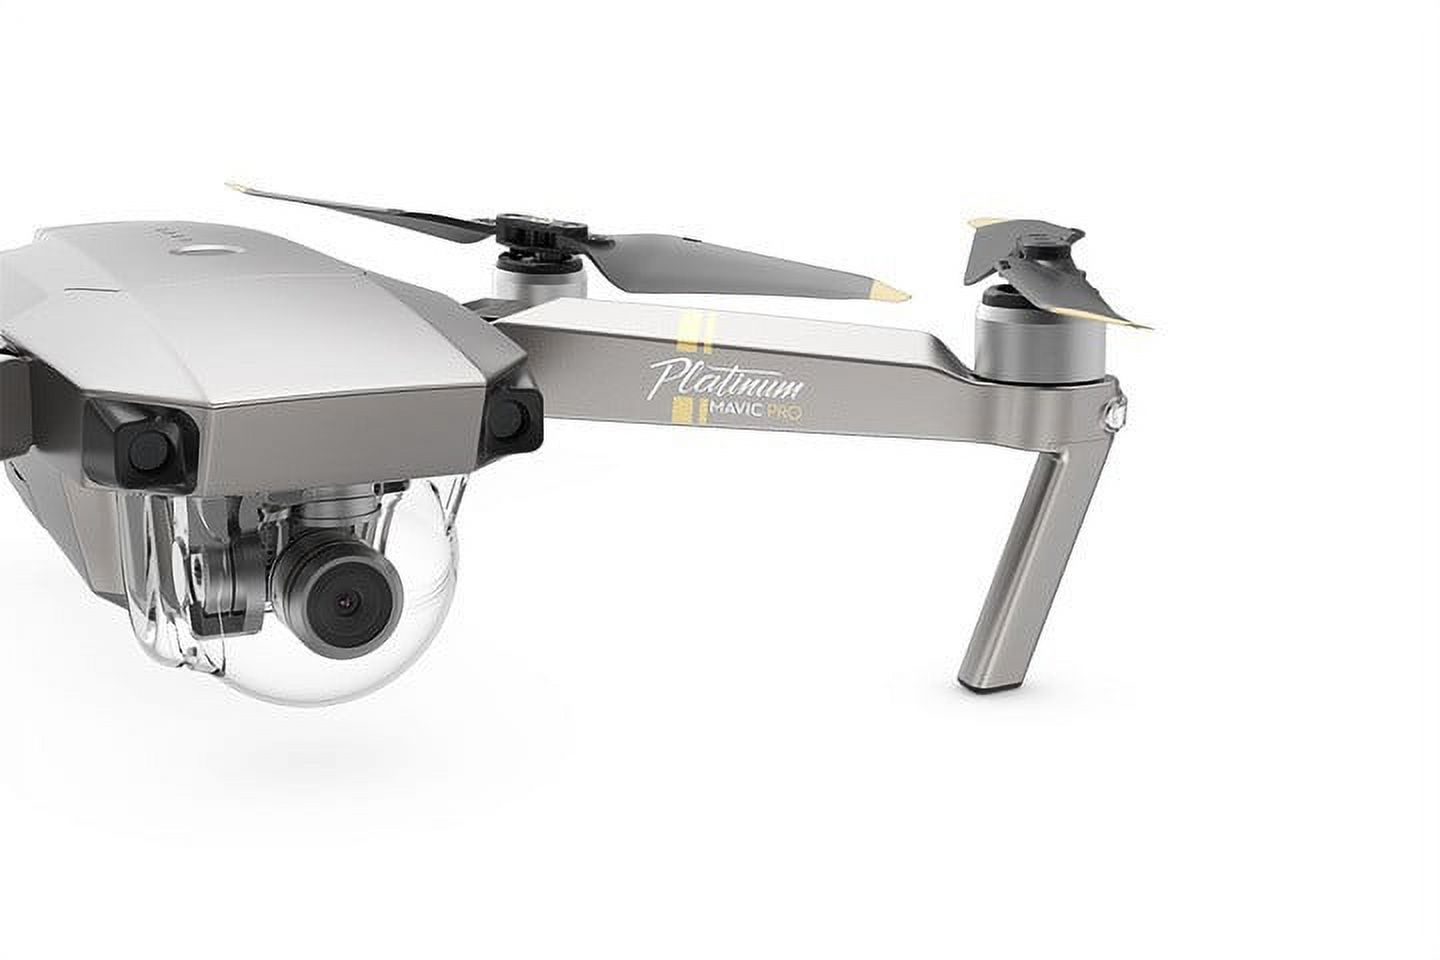 Dji Mavic Pro Platinum Quadcopter Drone - Fly More Combo - image 4 of 6